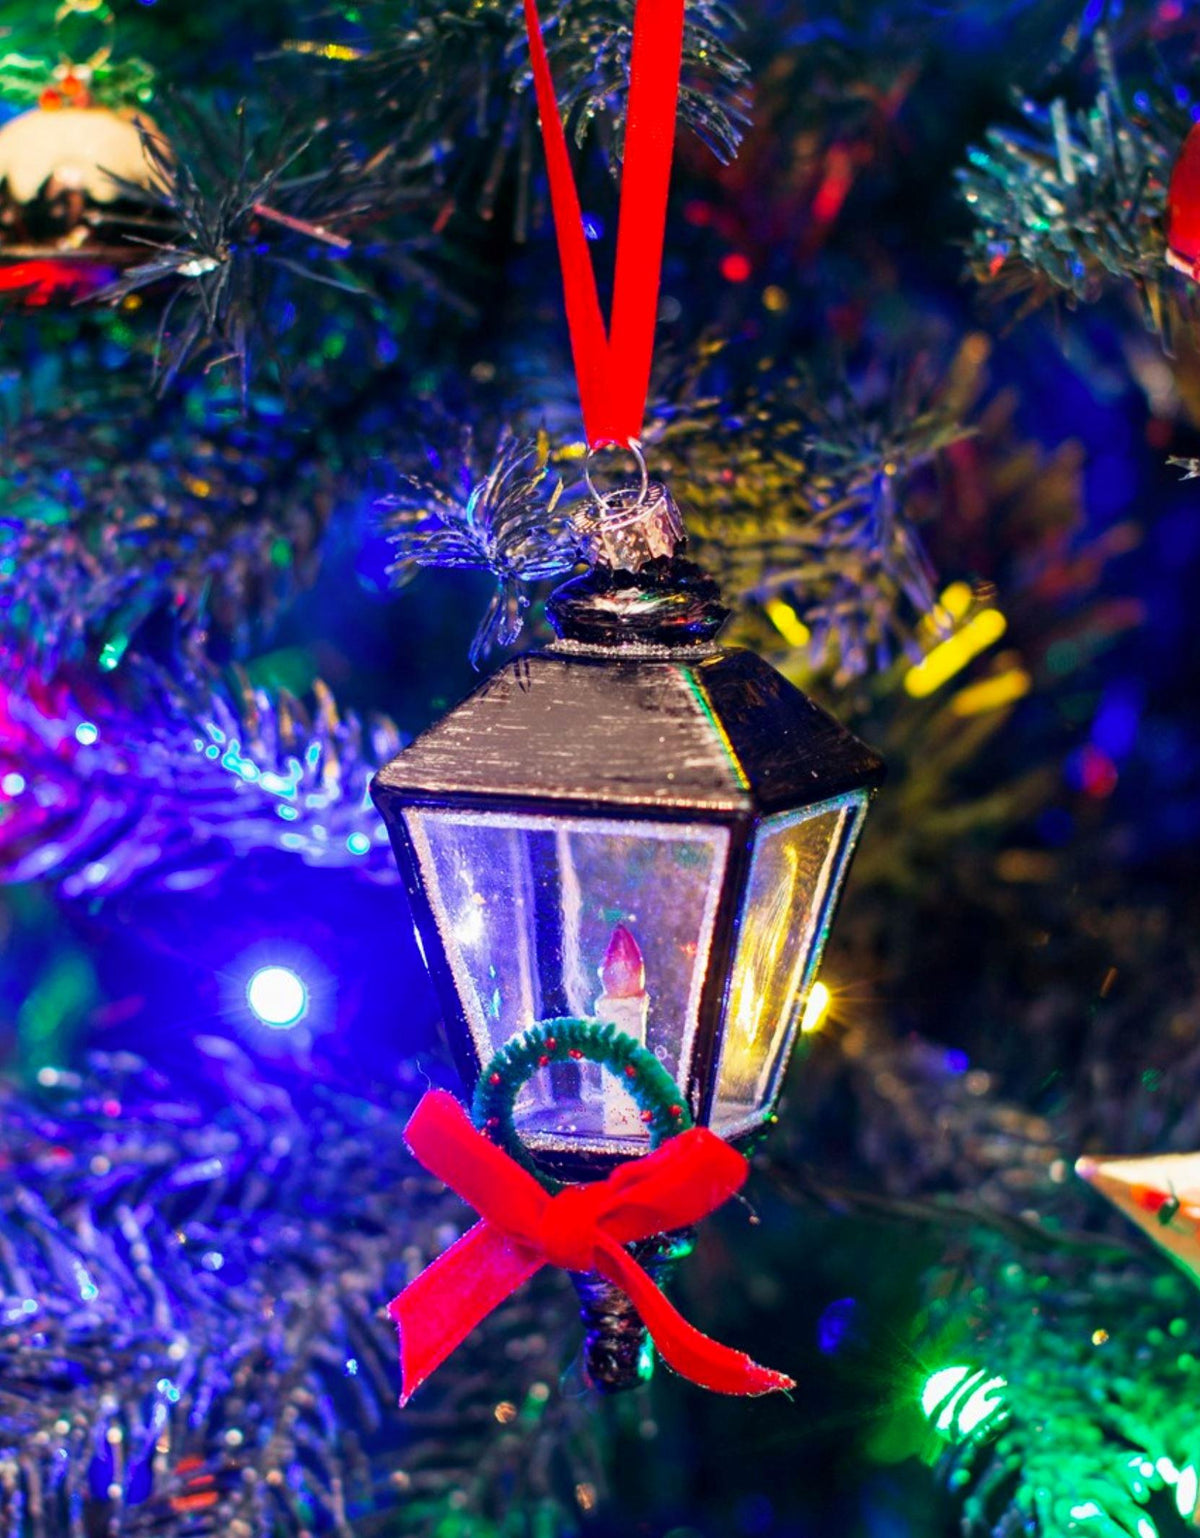 London Street Lamp Shaped Bauble Christmas Decorations Foxyavenue UK